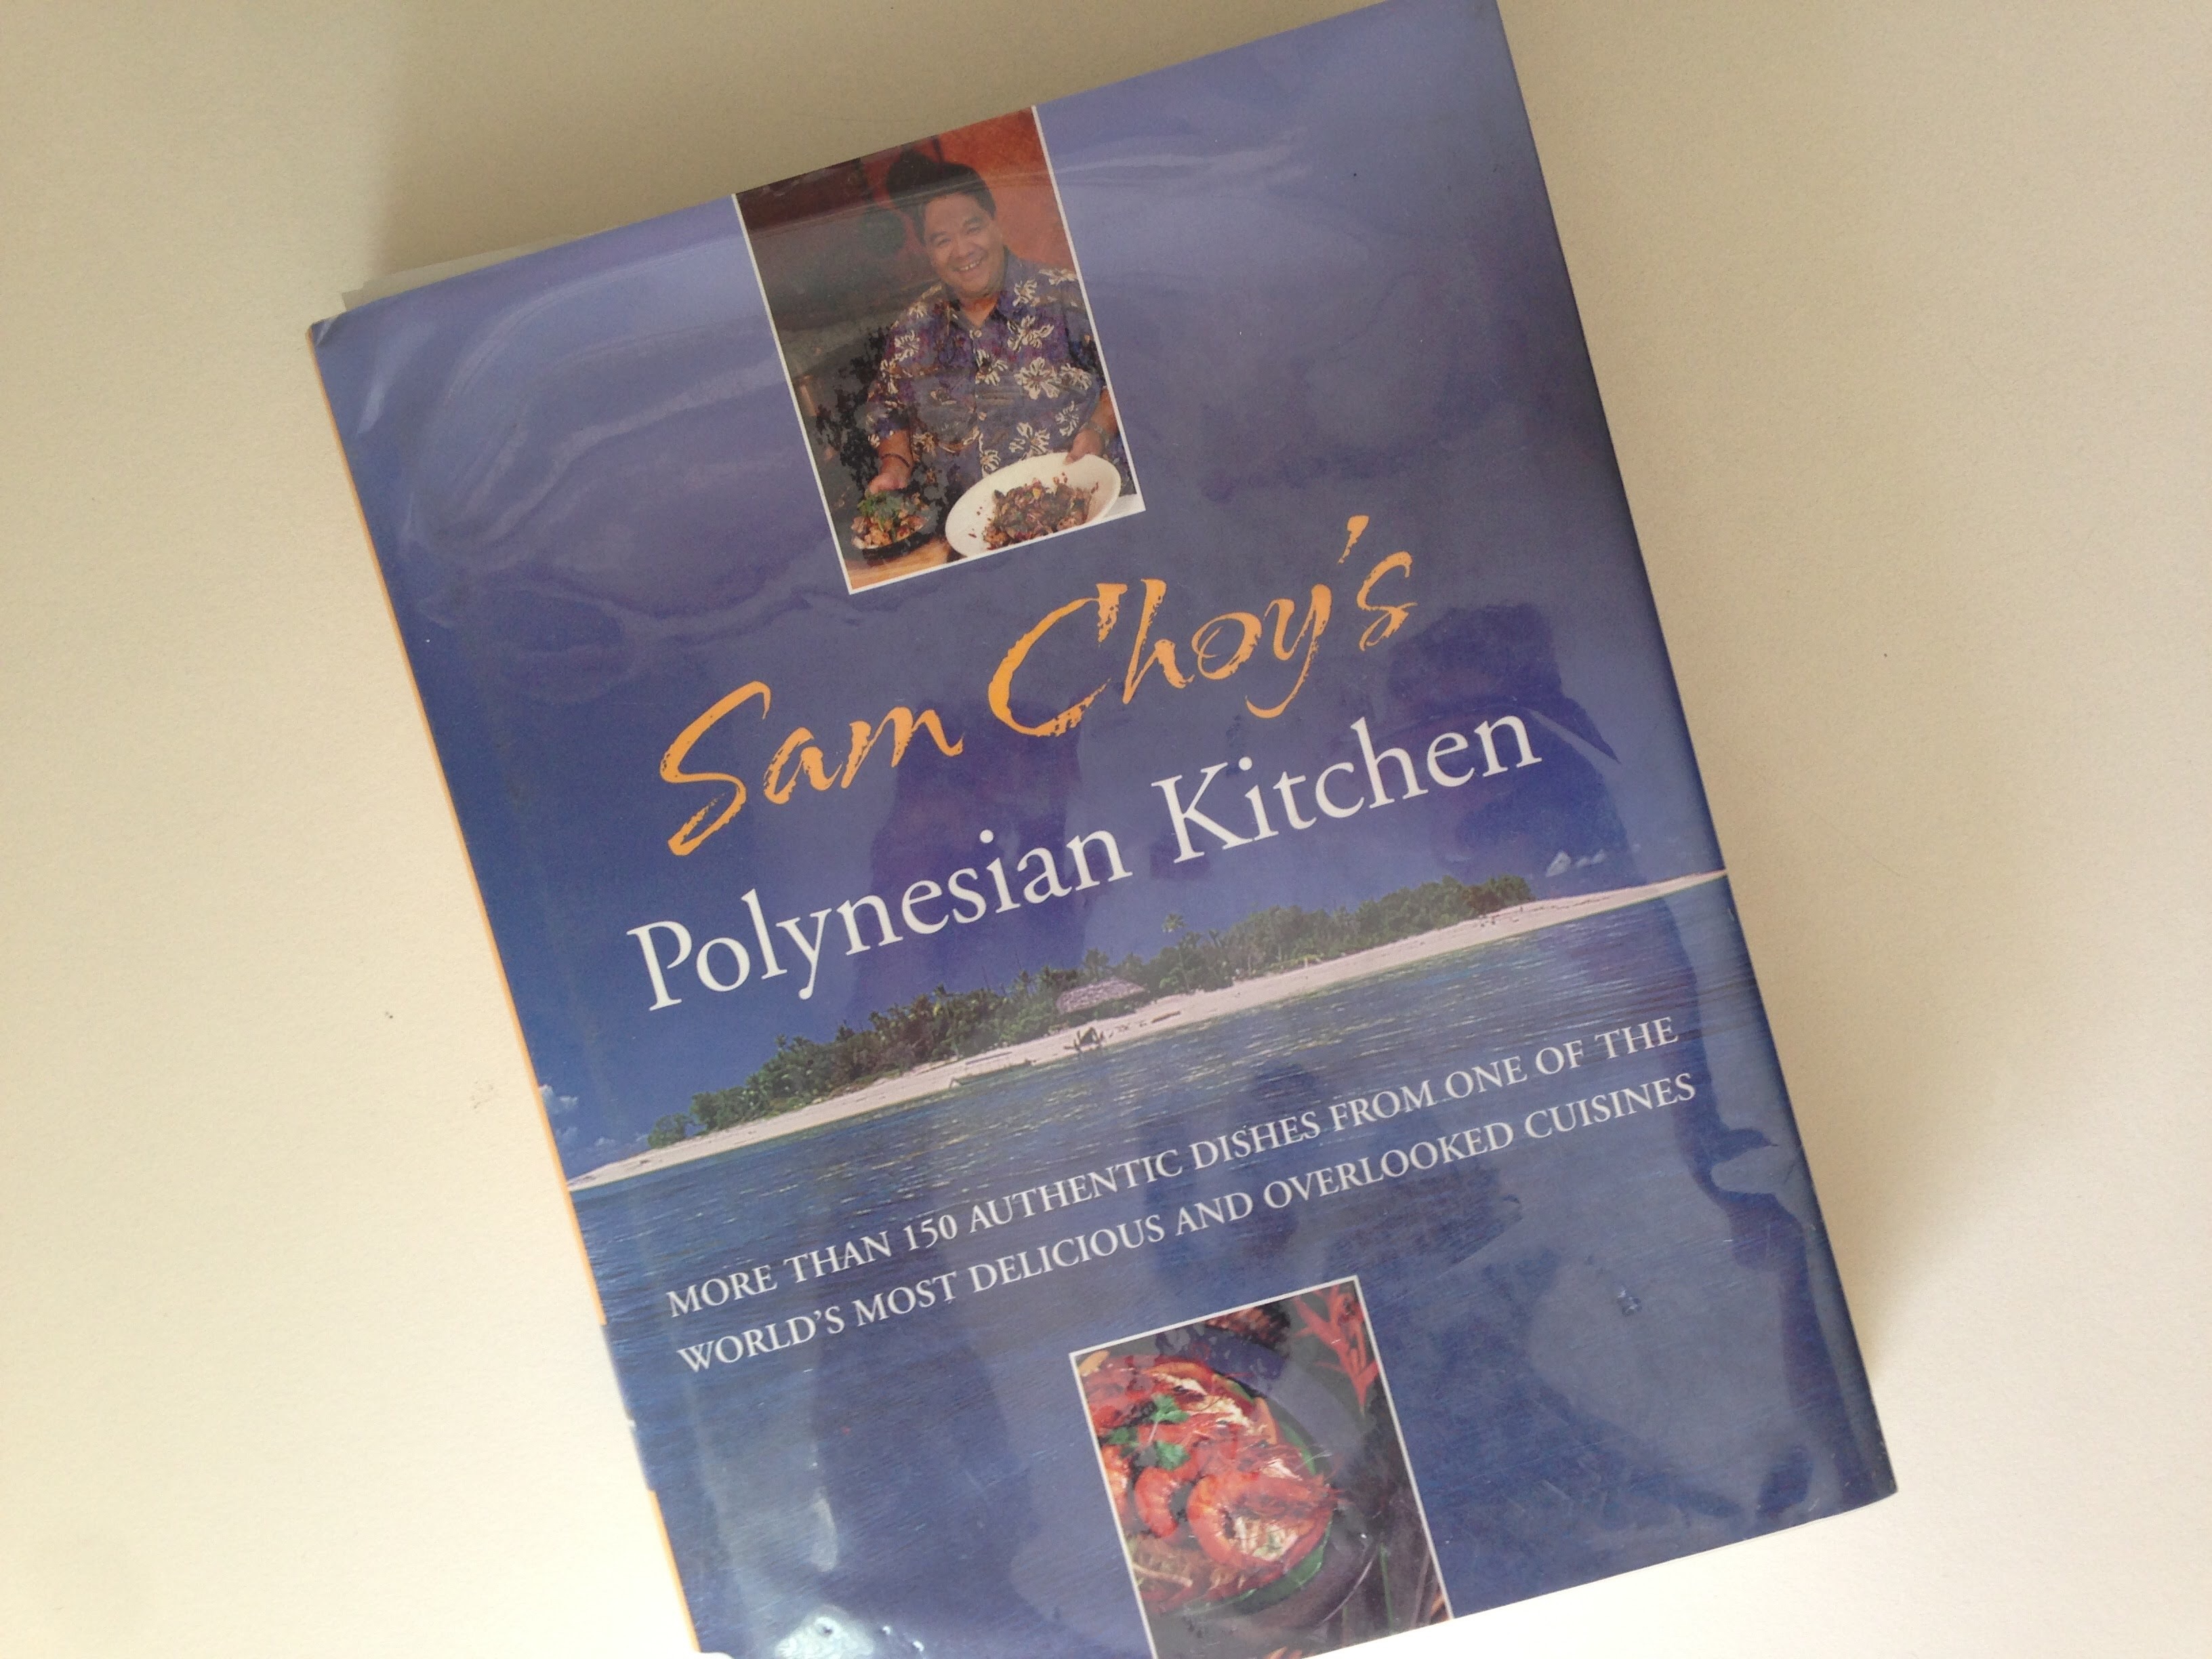 Sam Choy's Polynesian Kitchen cookbook